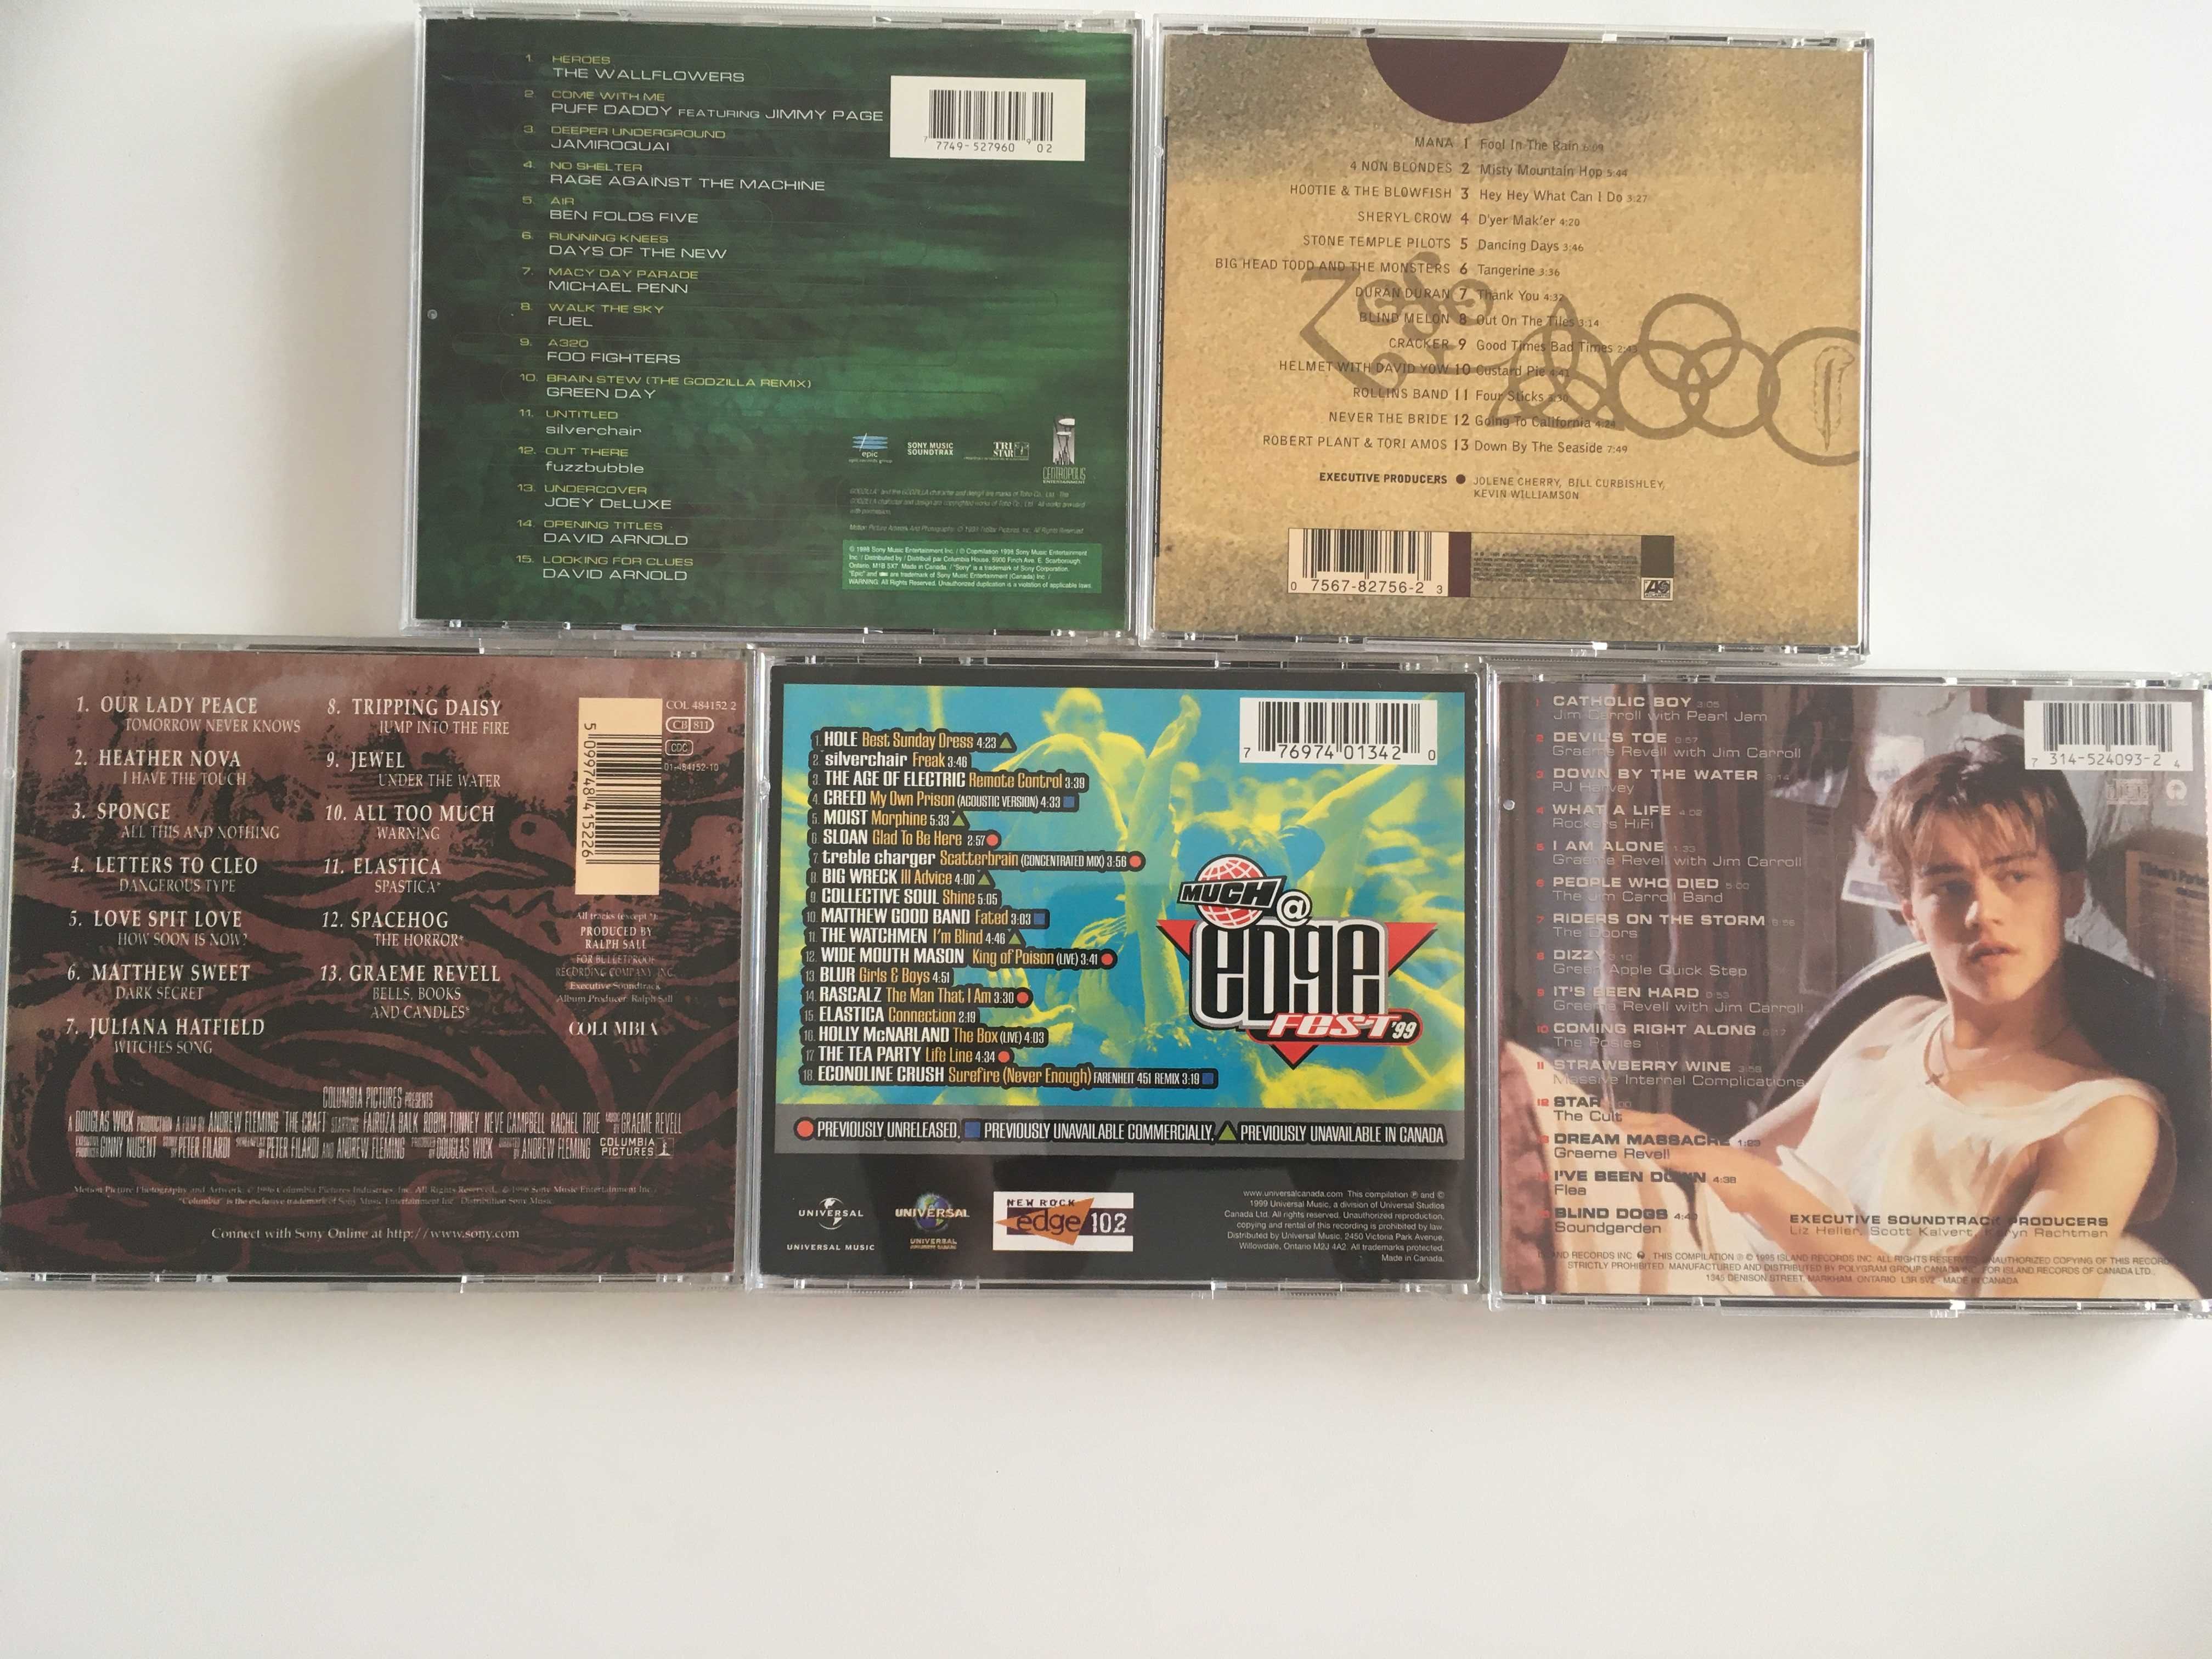 Lote cds - original soundtracks, tributes e compilaçaoes